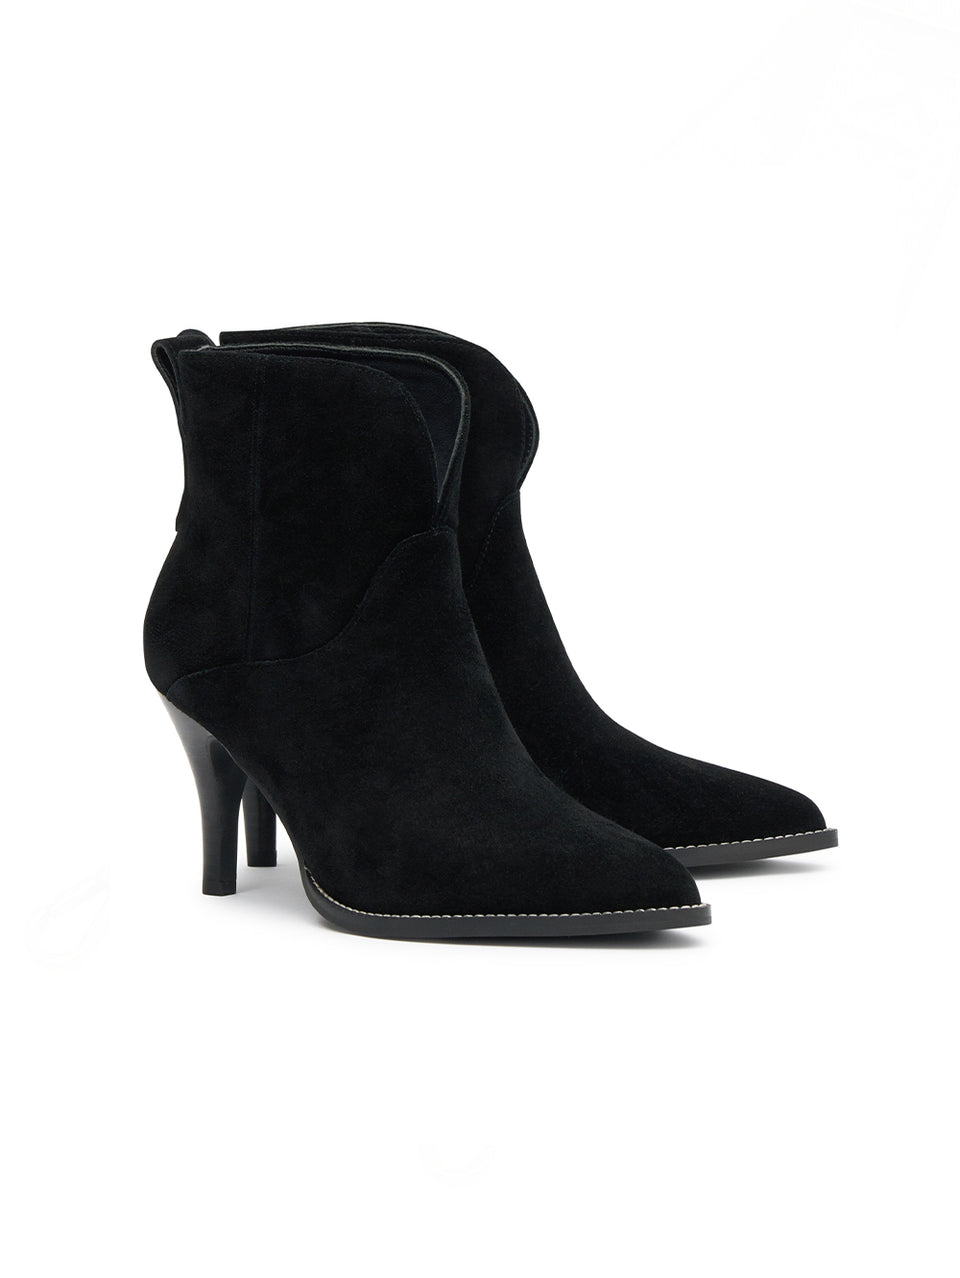 Kate Boot Black KIVARI | Black suede leather short boot